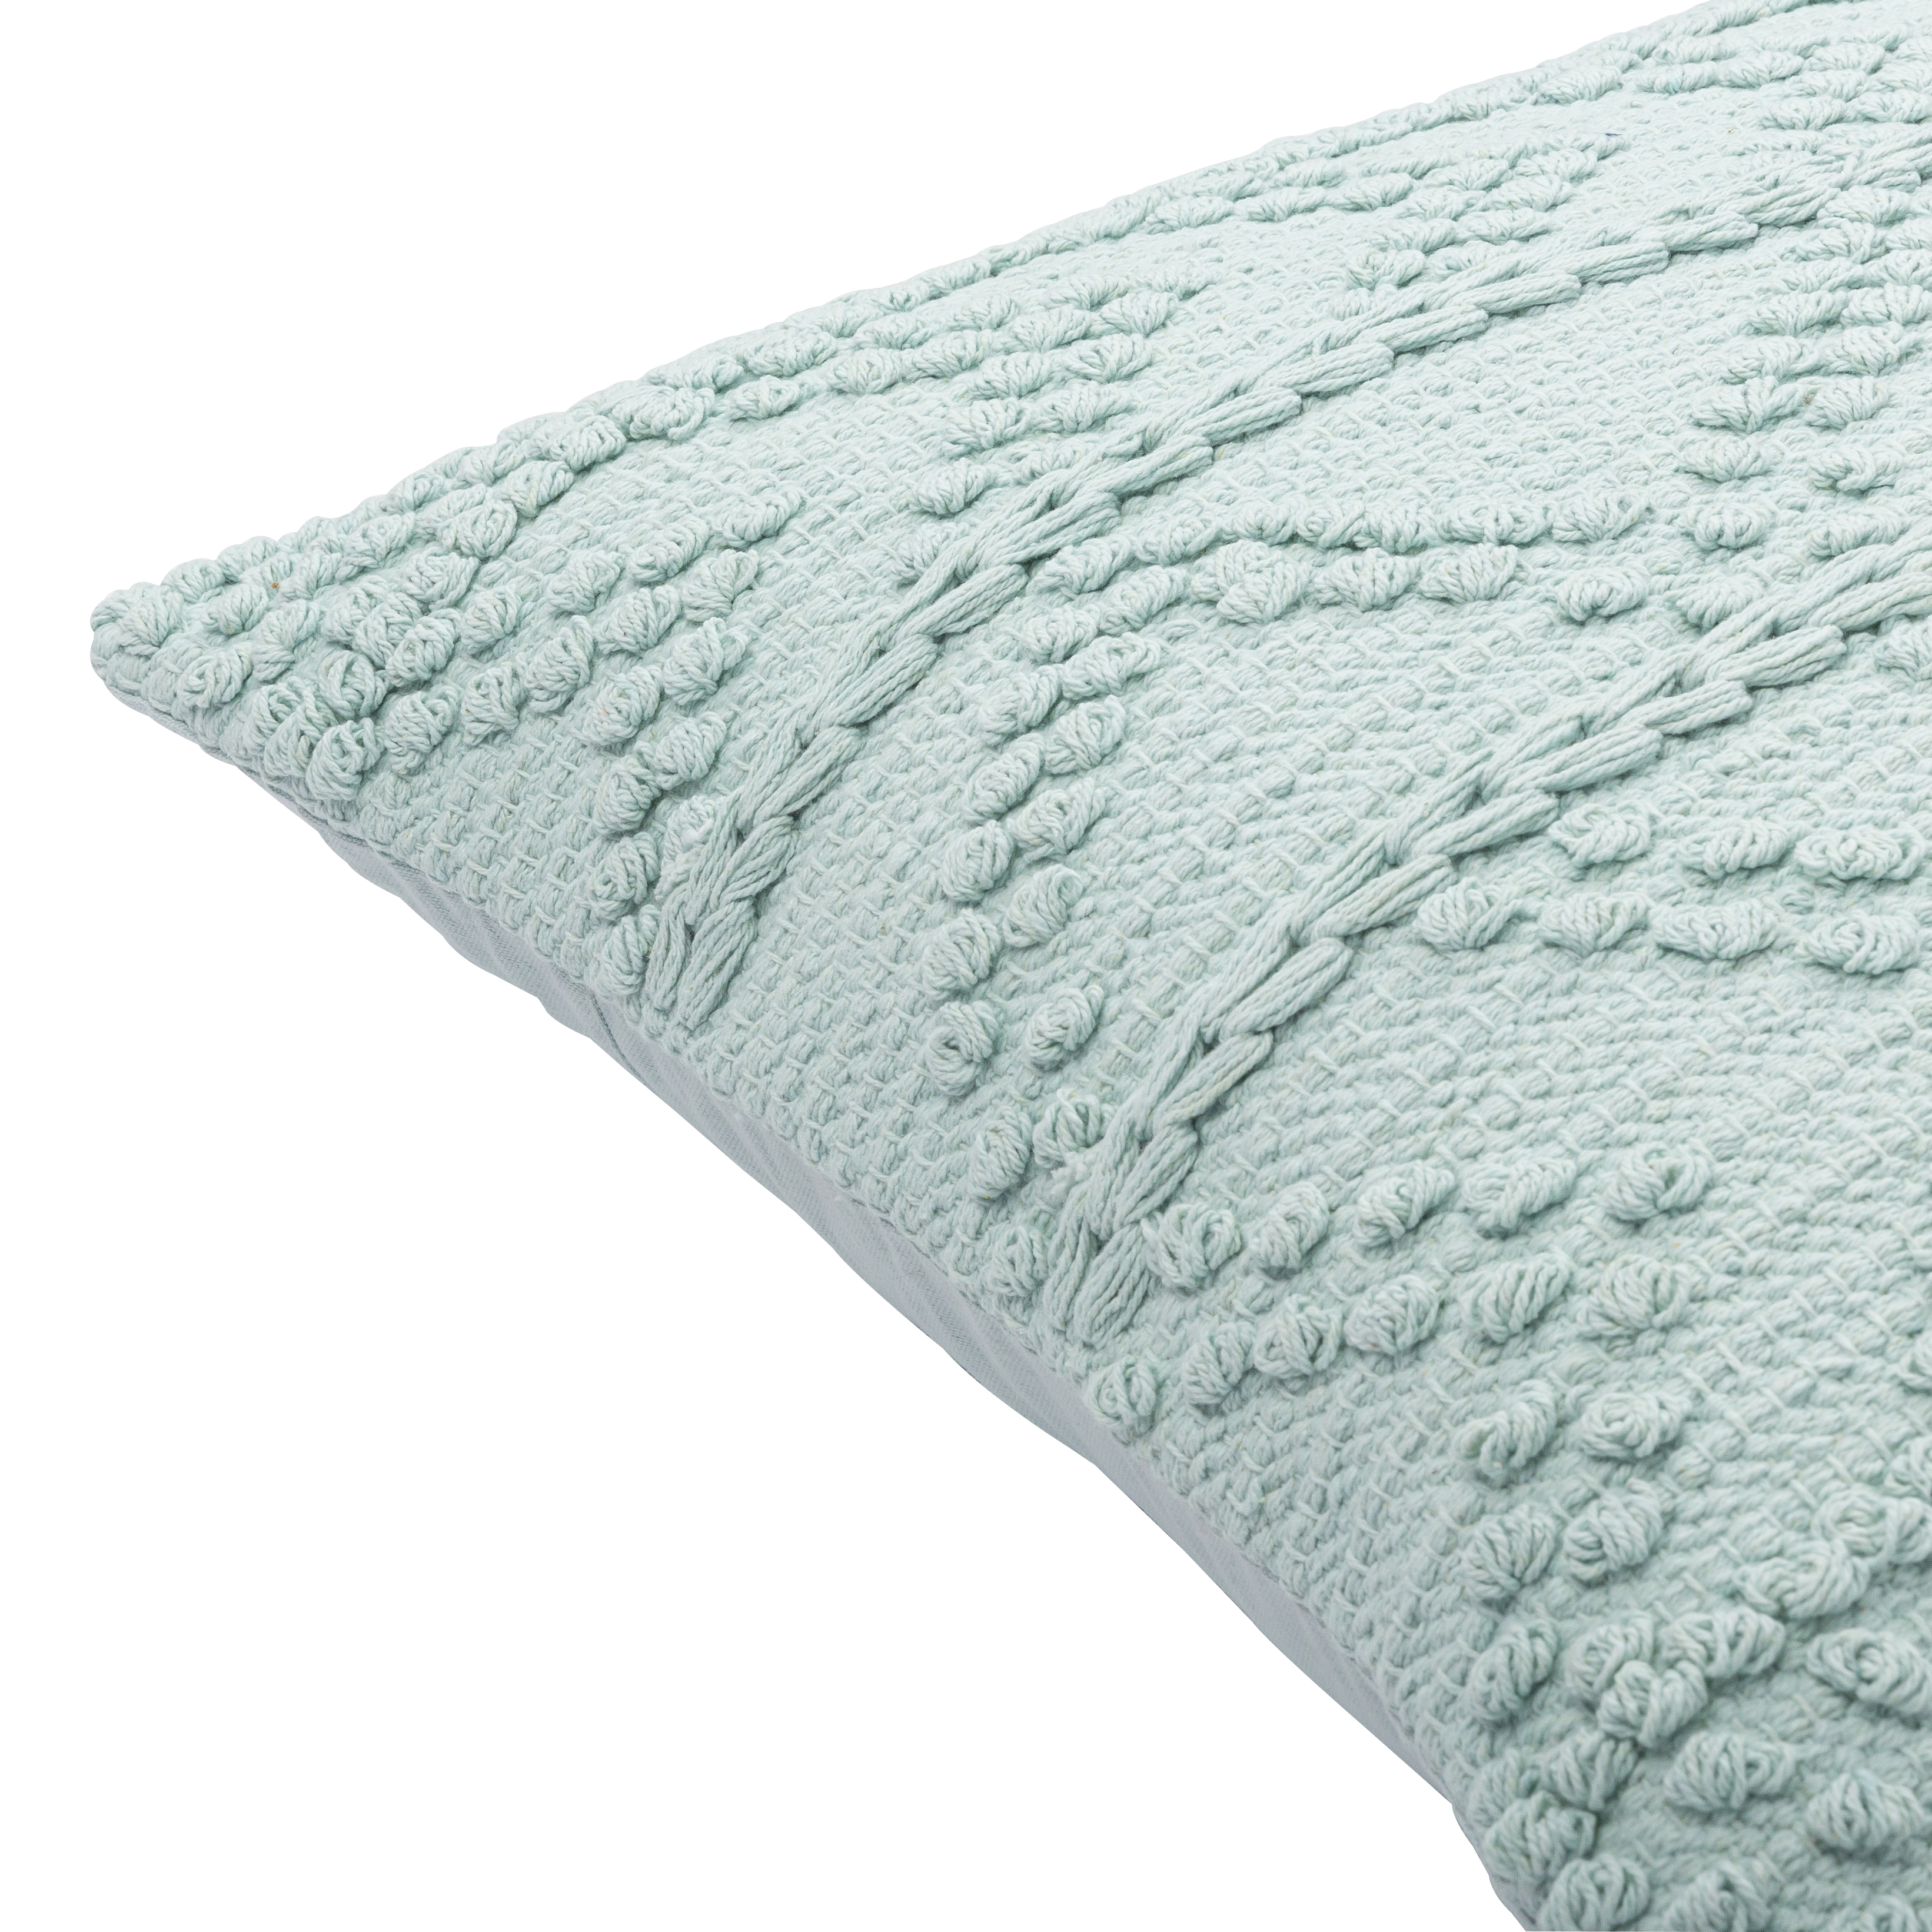 Merdo Throw Pillow, 18" x 18", with poly insert - Image 1